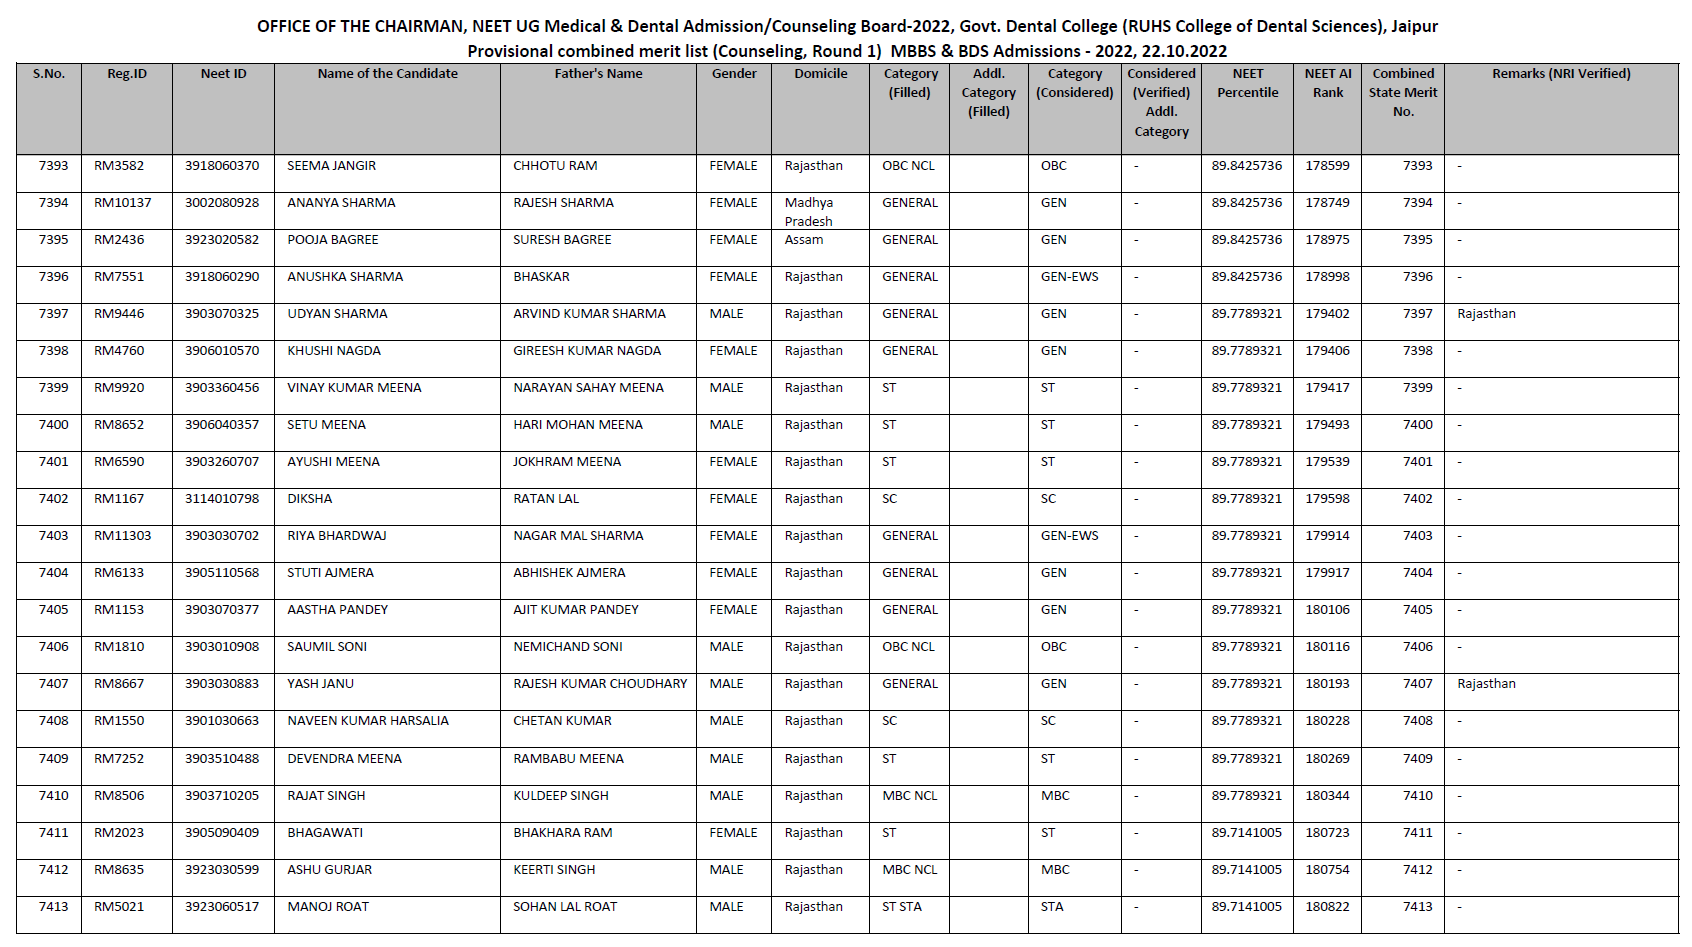 Rajasthan State Merit List 2022